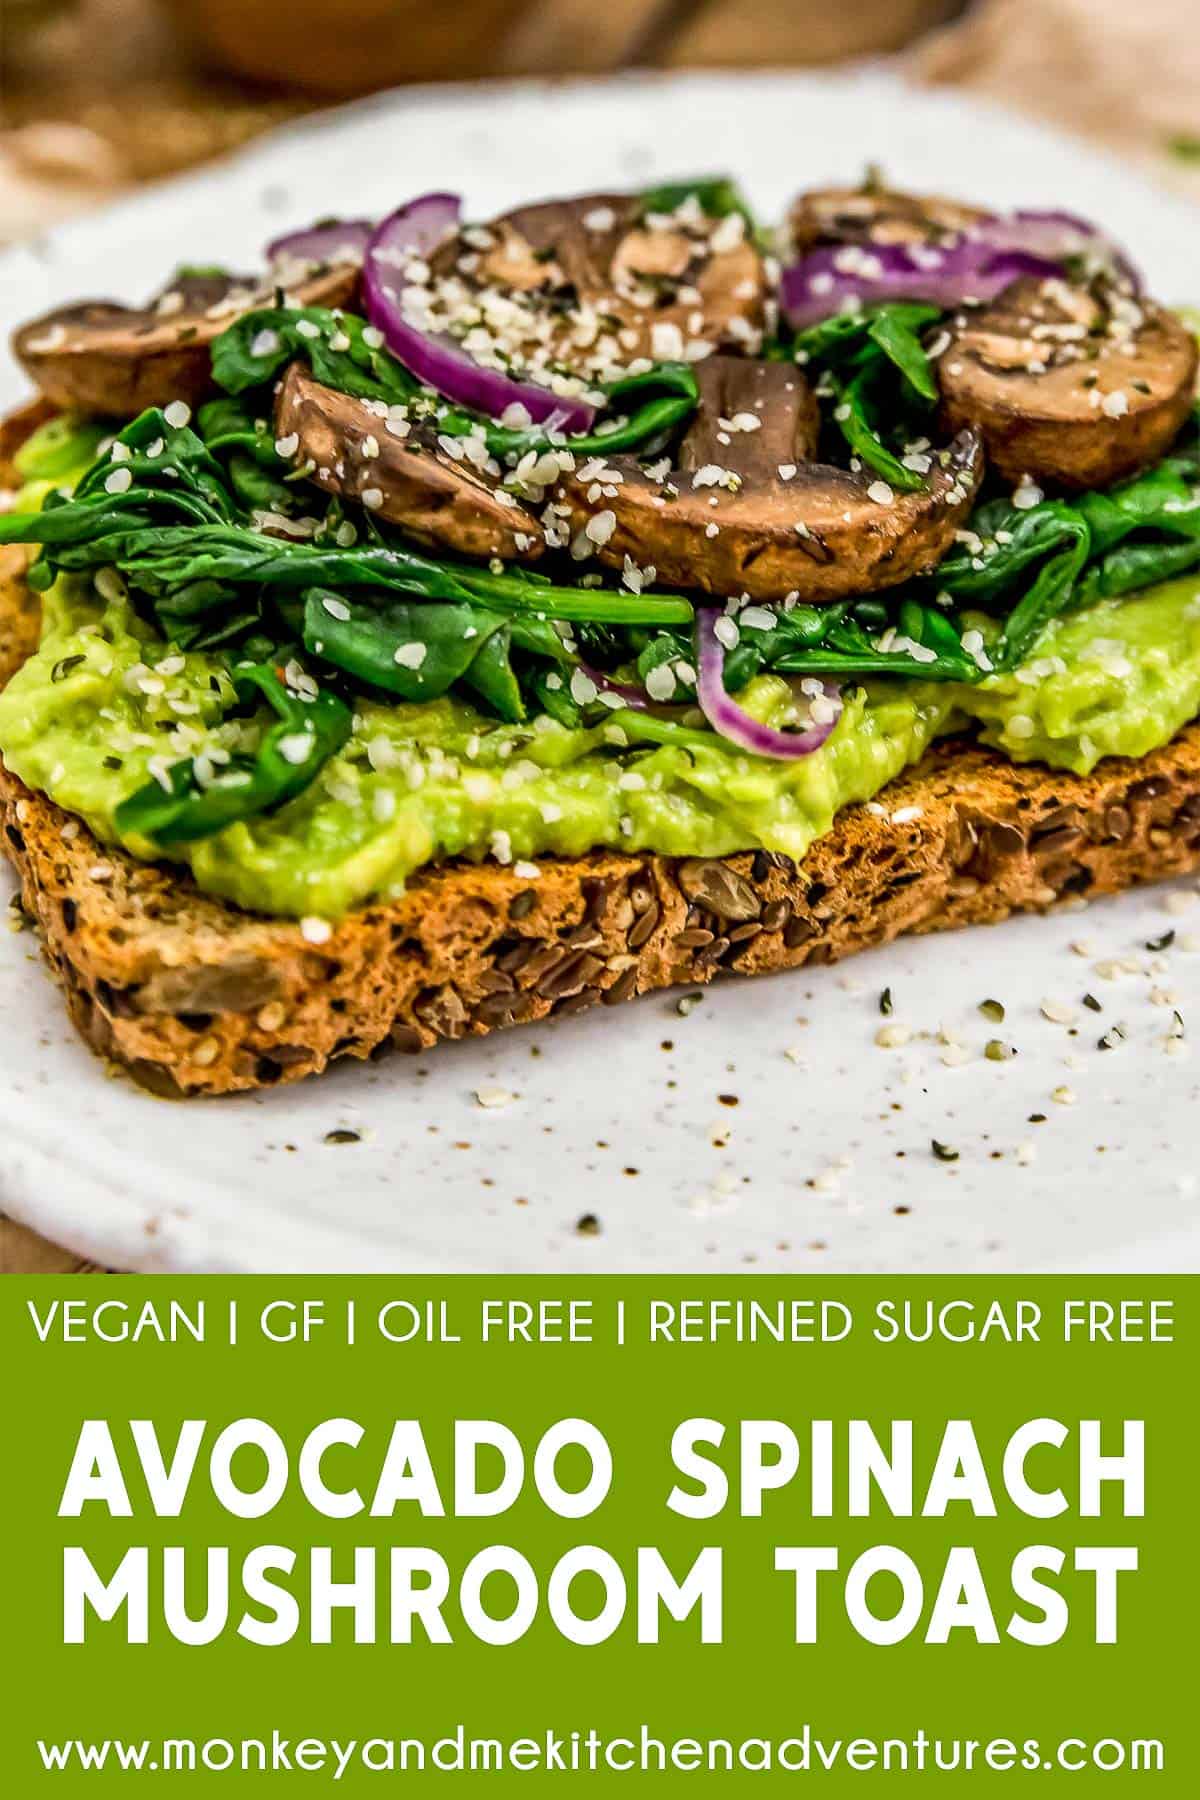 Avocado Spinach Mushroom Toast with text description